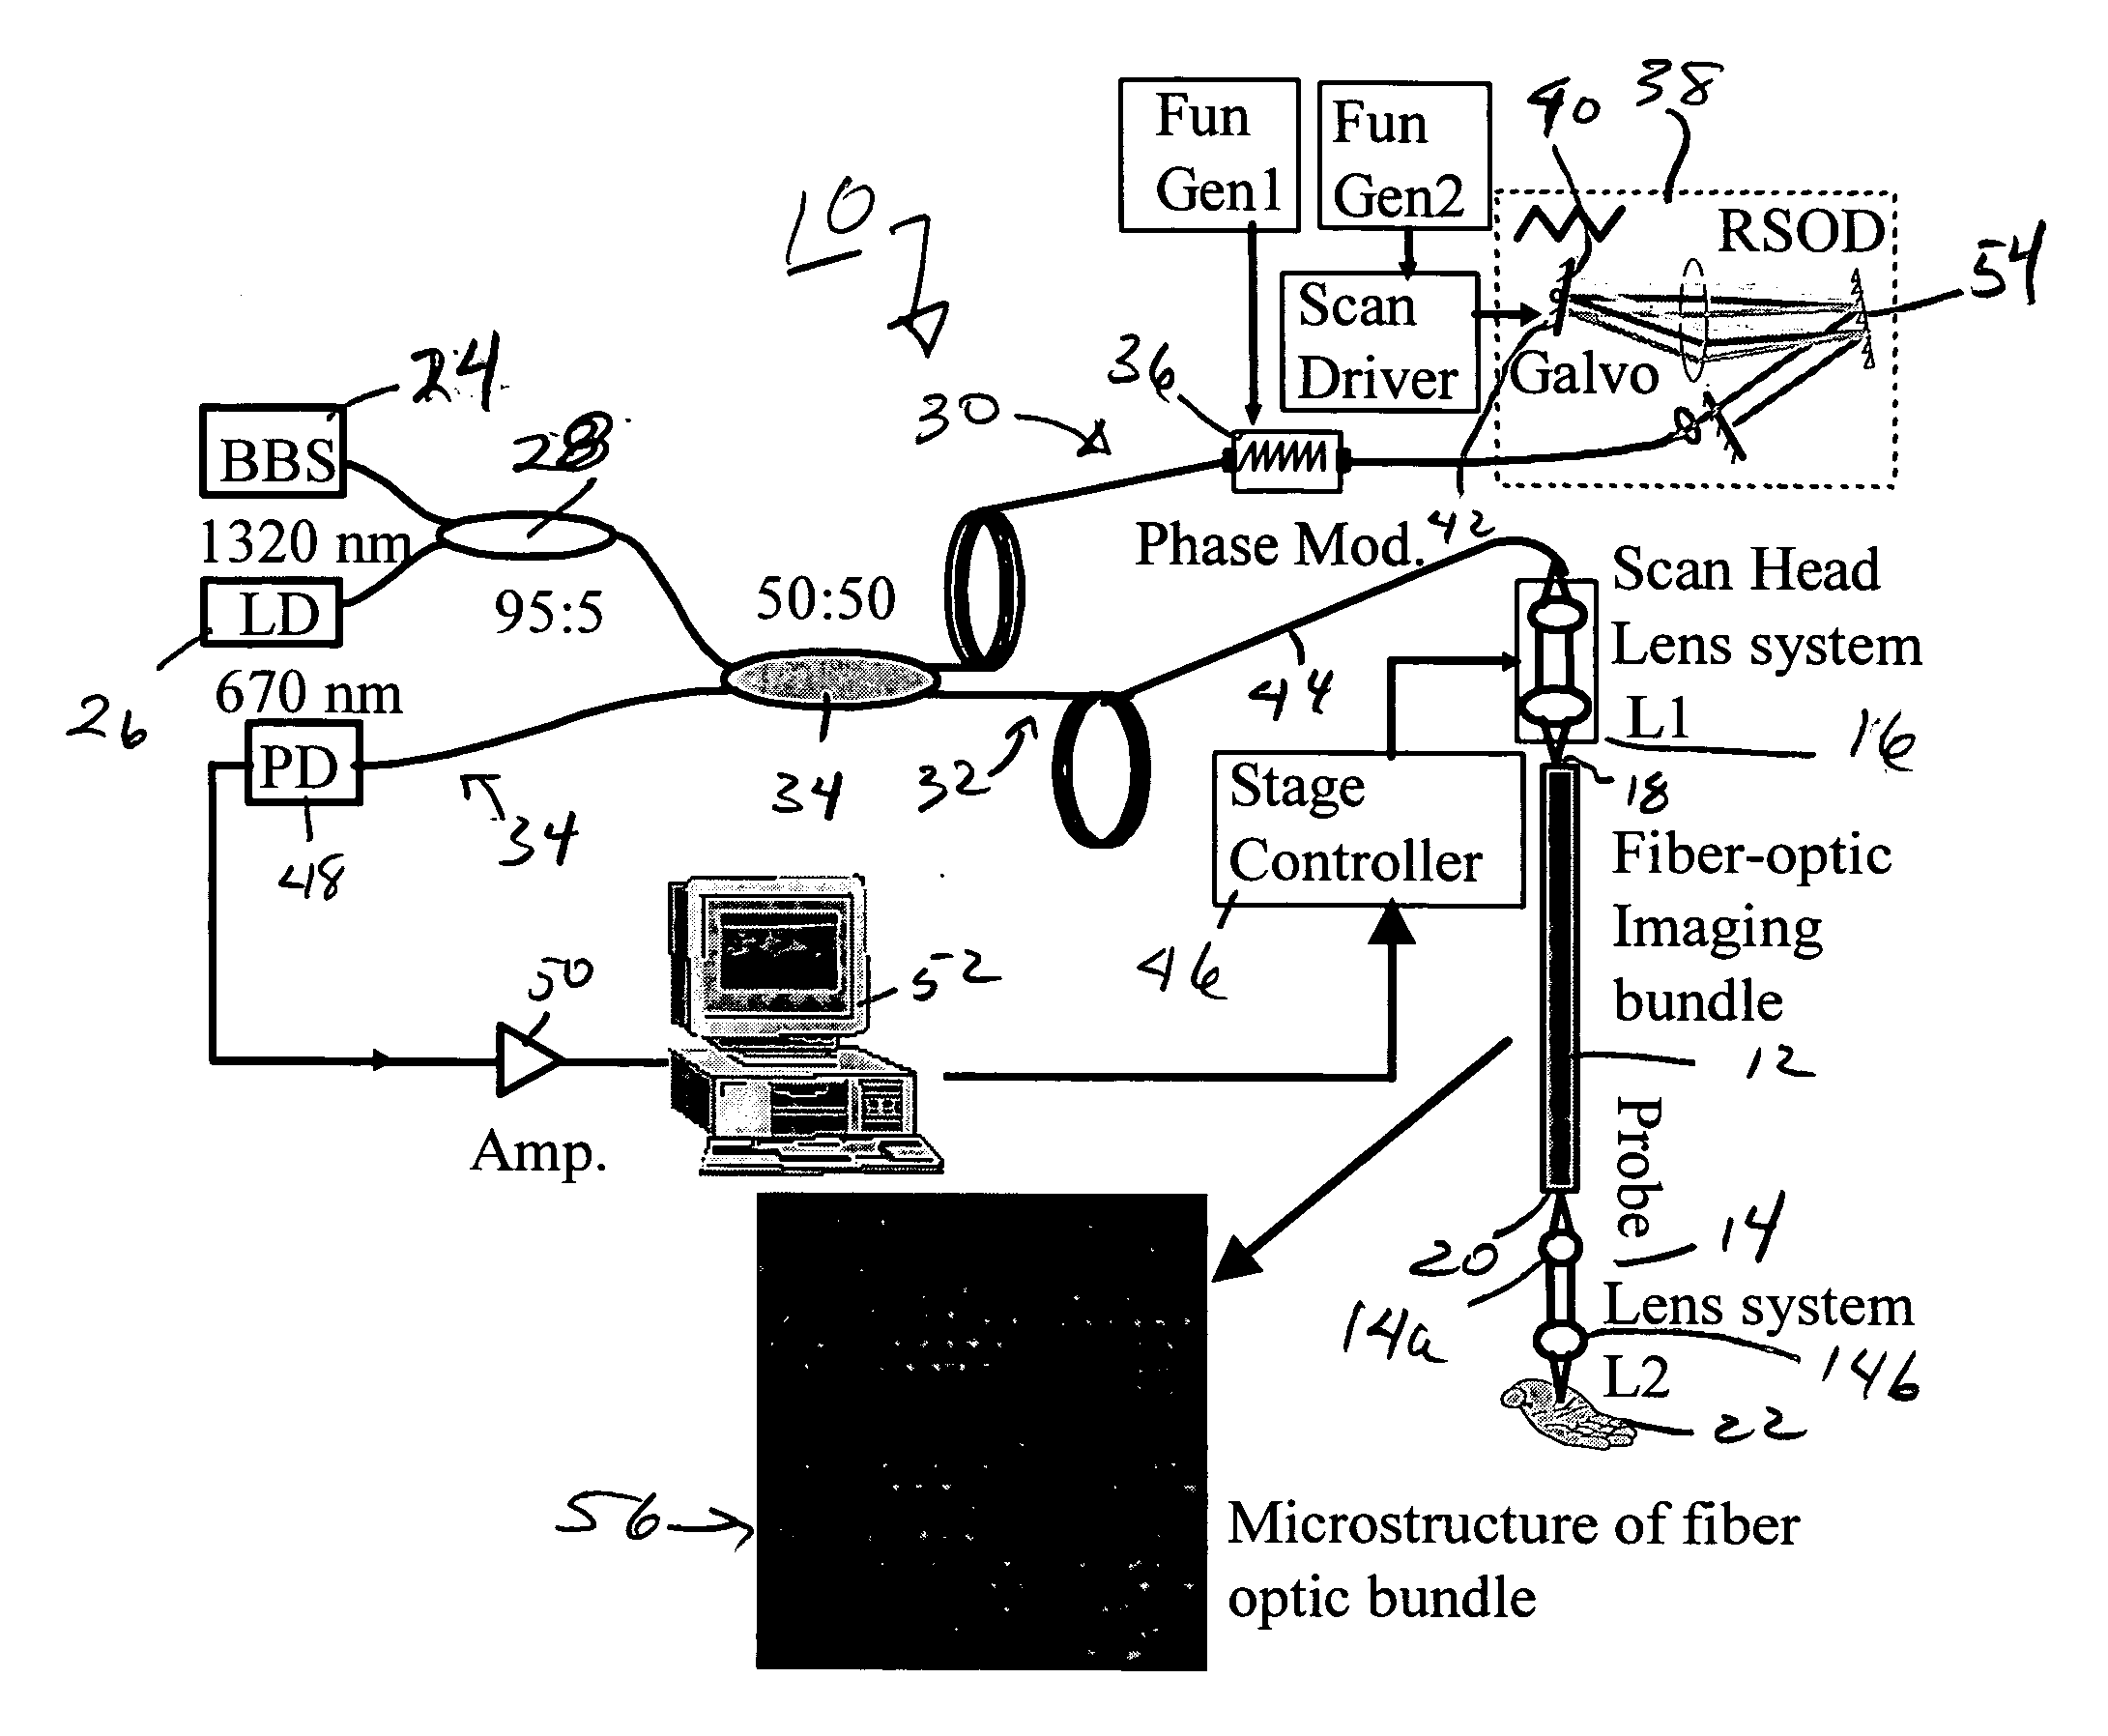 Optical coherent tomographic (OCT) imaging apparatus and method using a fiber bundle